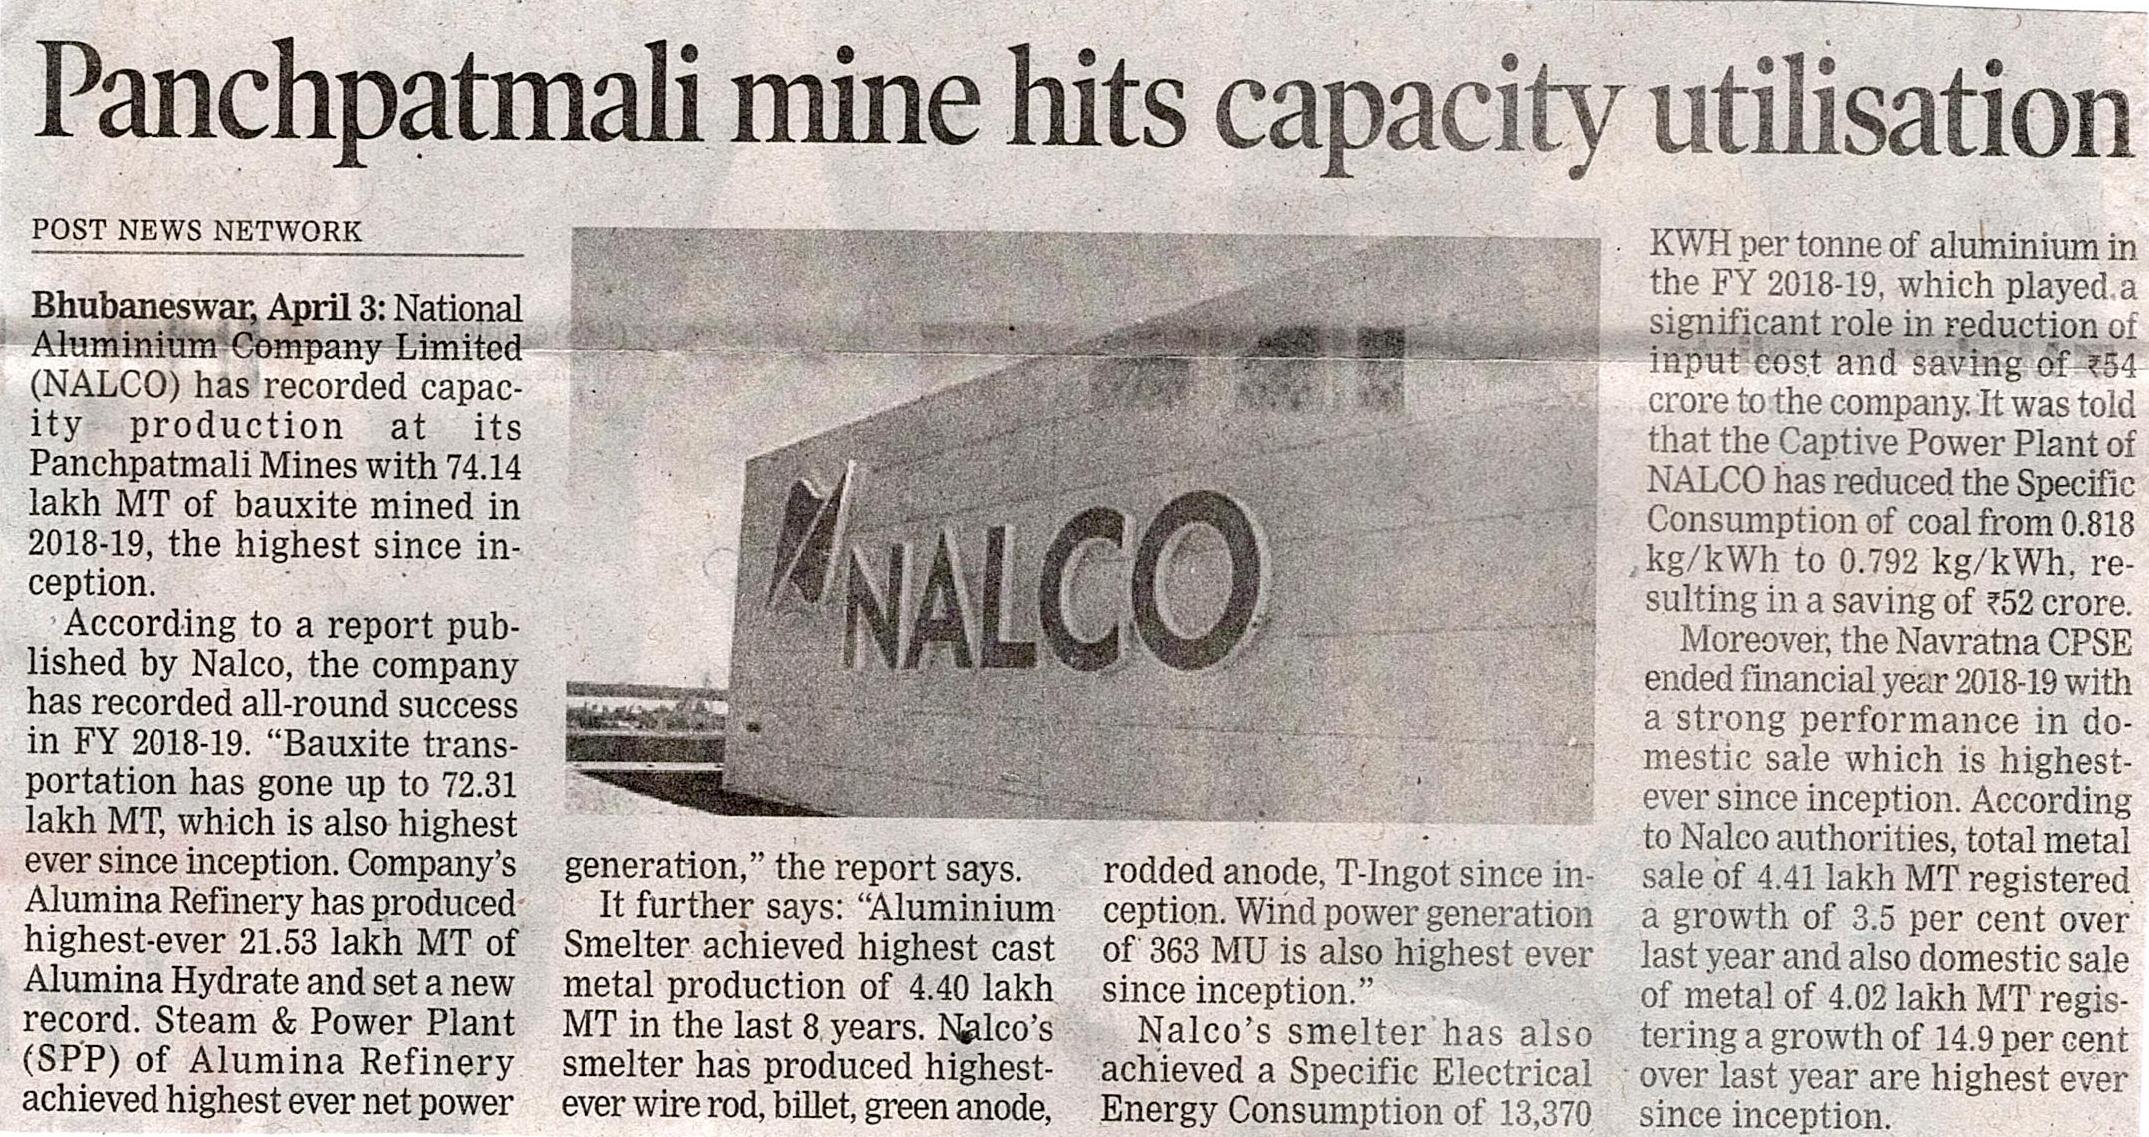 Panchpatmali mine hits capacity utilisations